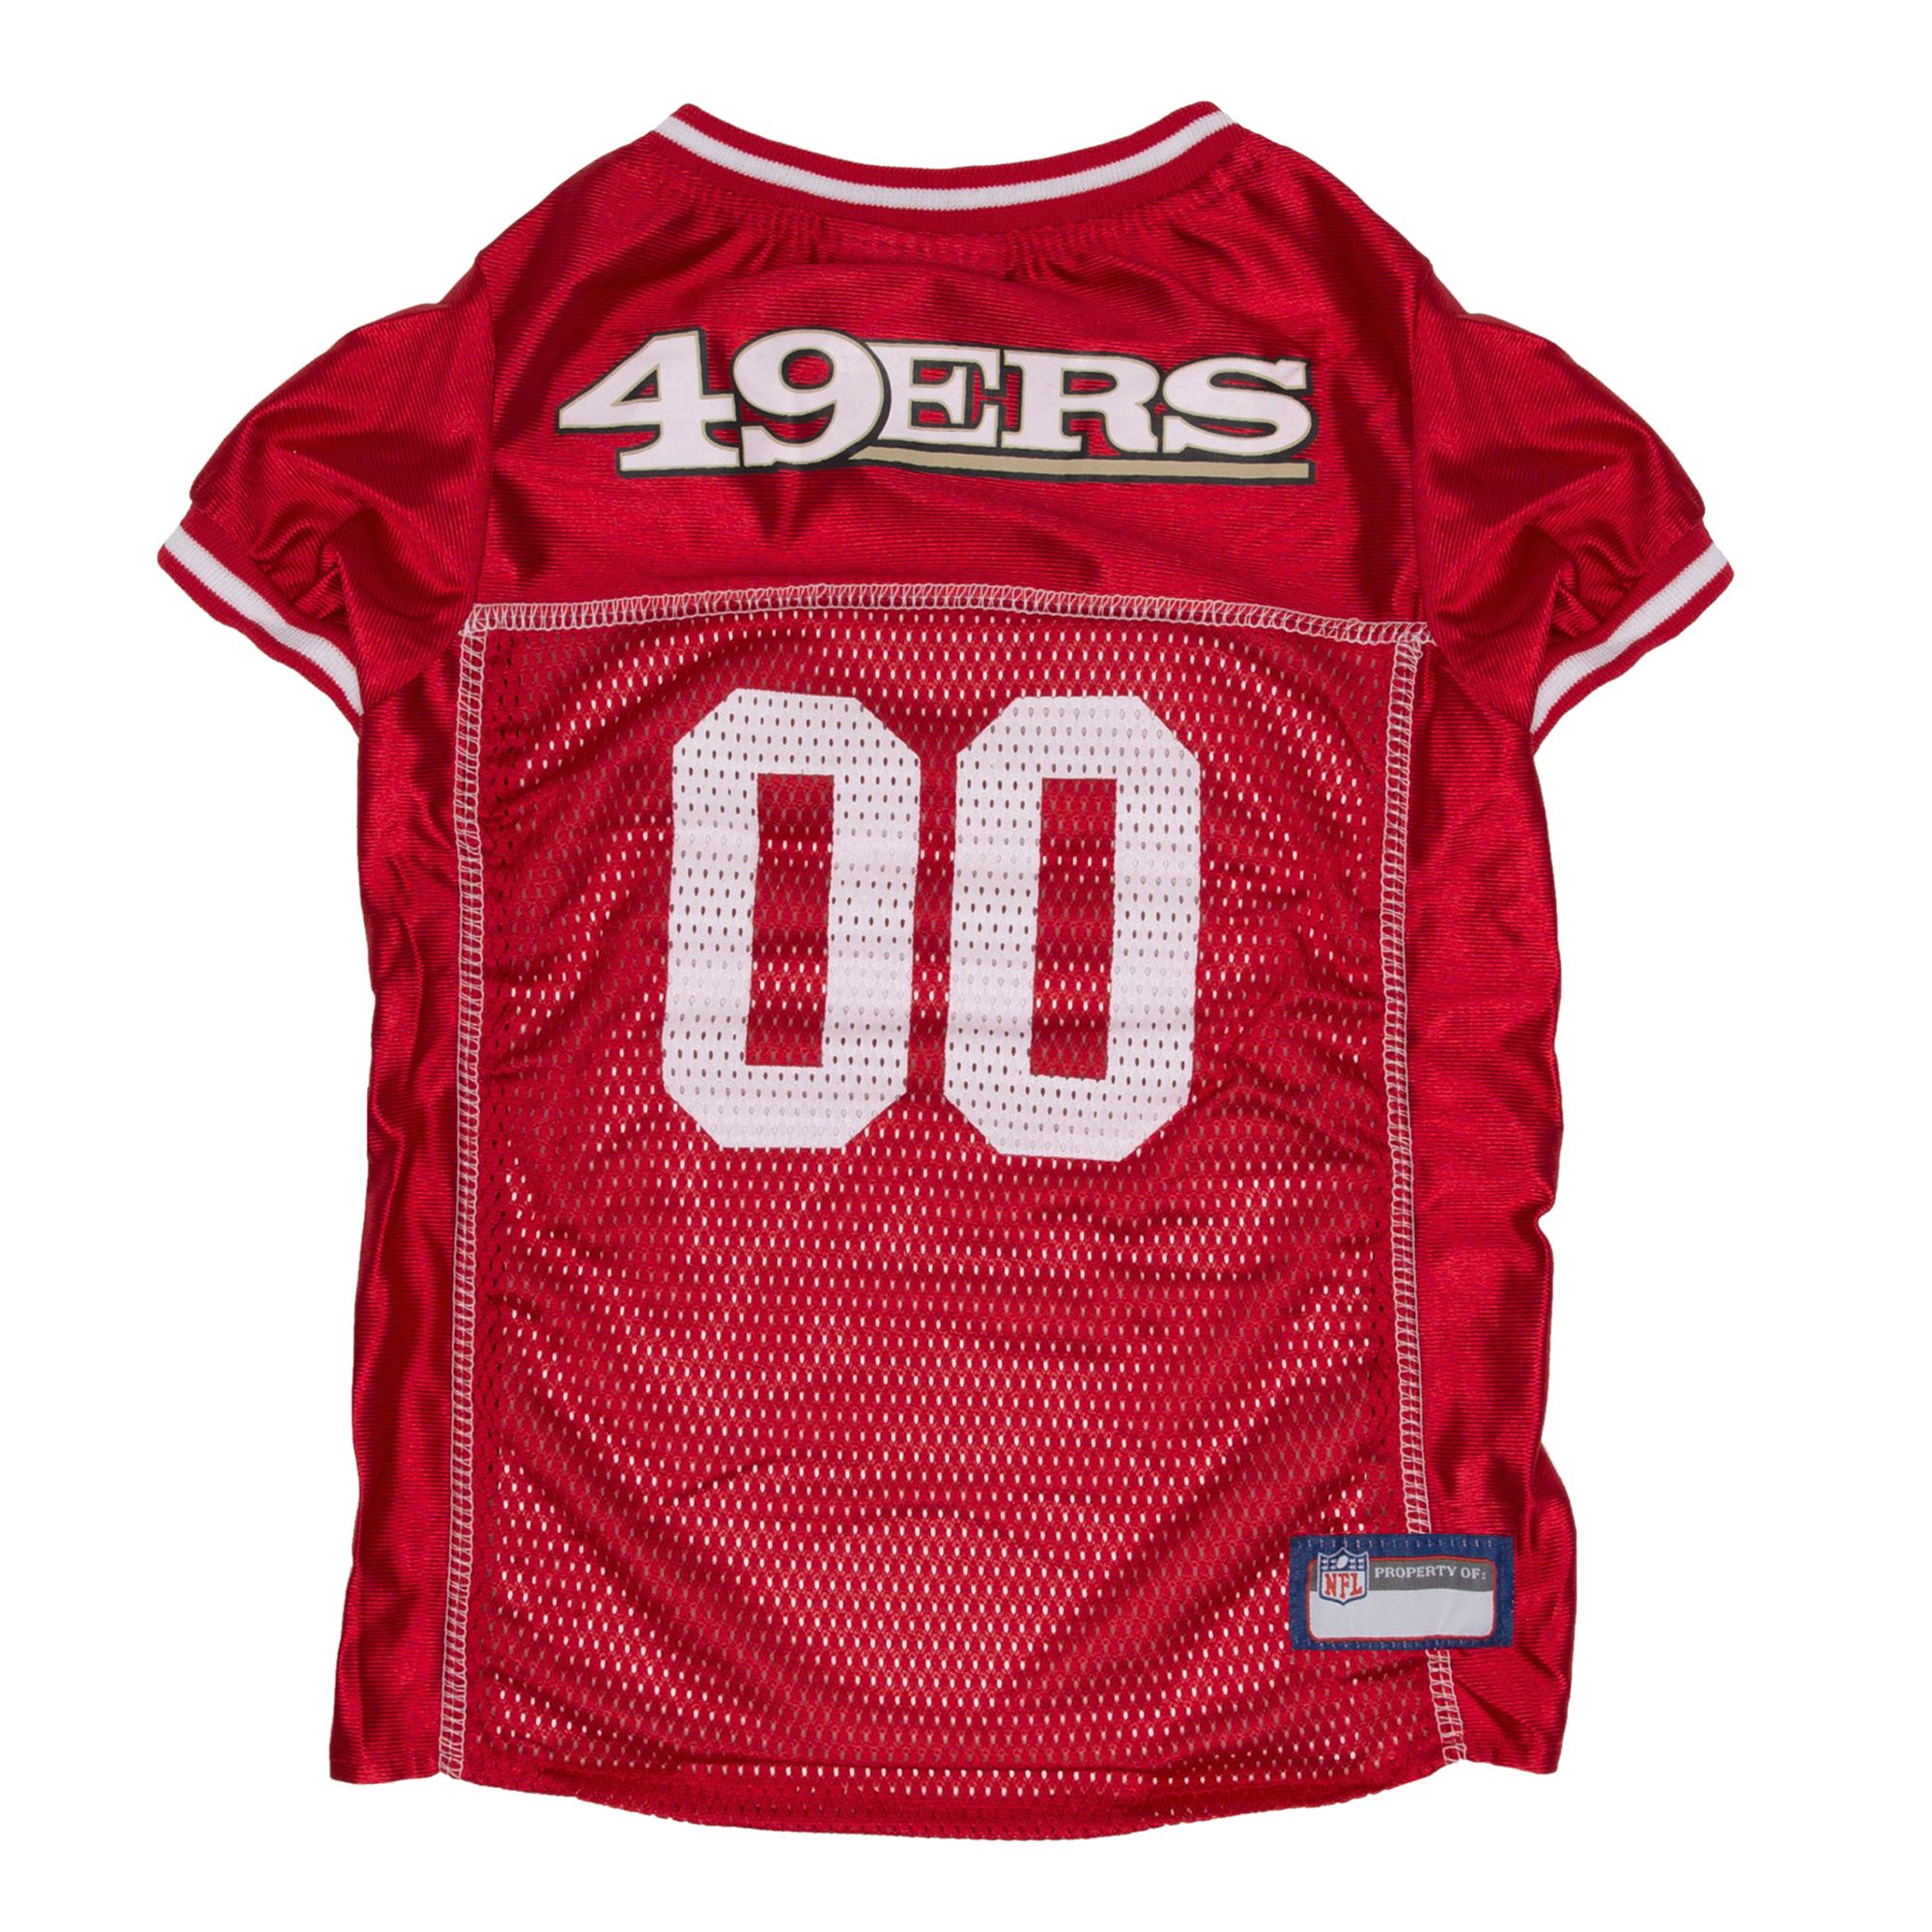 49ers pet jersey